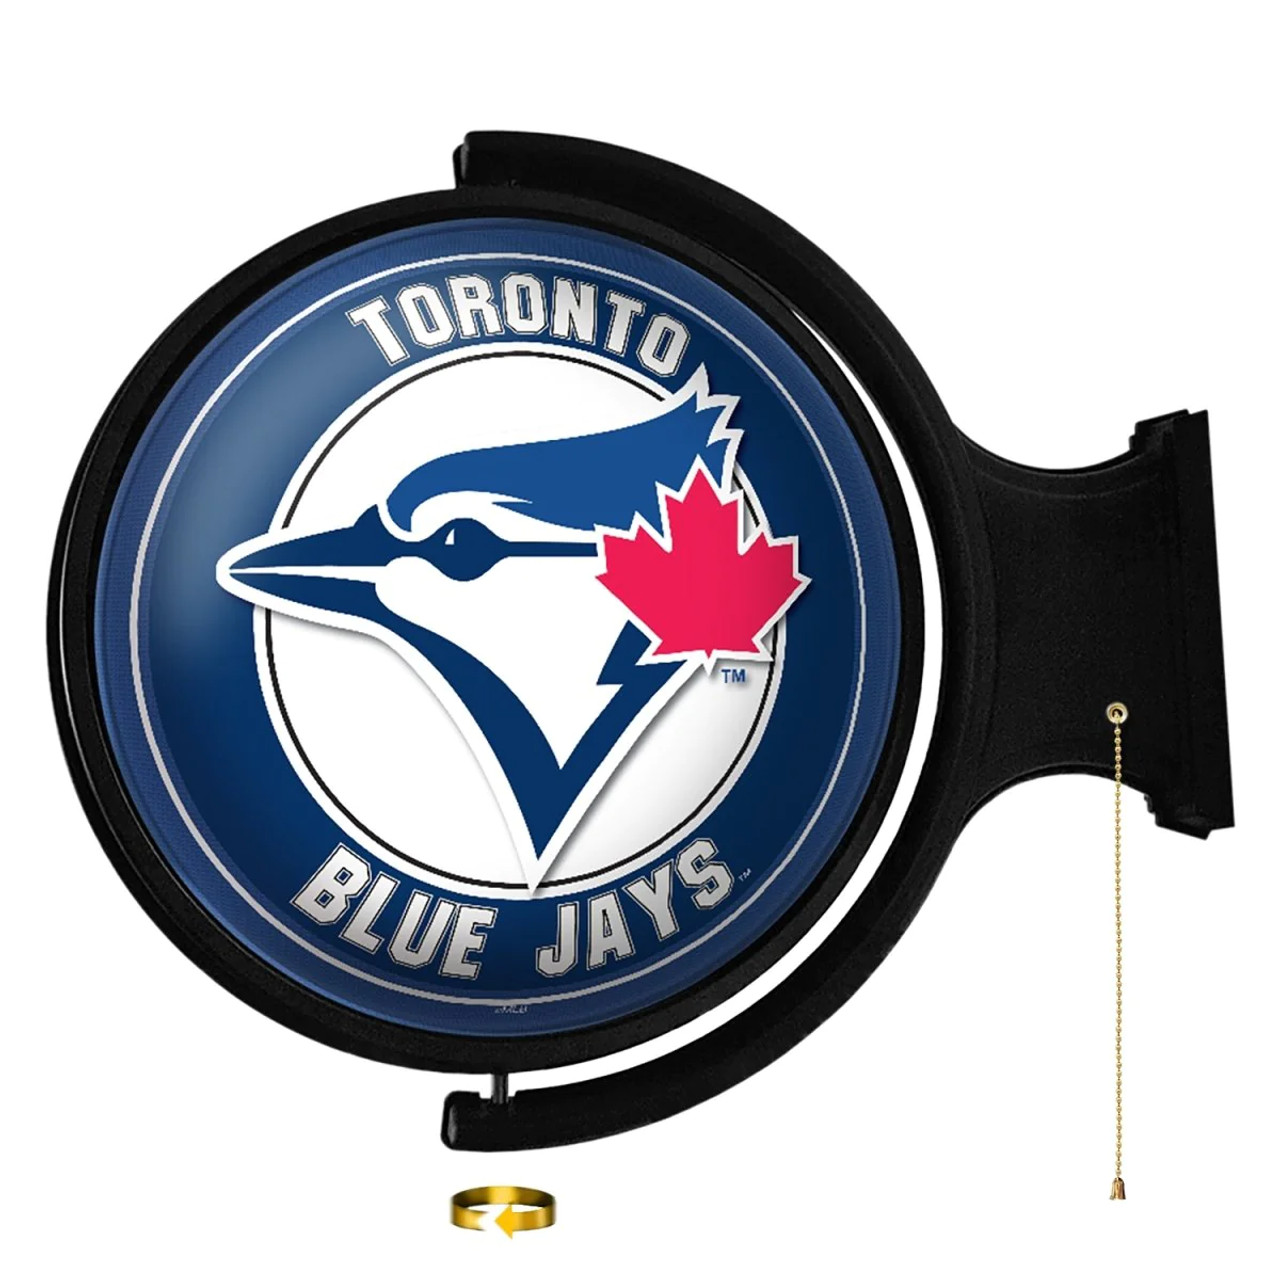 MBTORO-115-01, TOR, Toronto Blue, Jays,  Original, Round, Rotating, Lighted, Wall, Sign, The Fan-Brand, 704384952657, LED